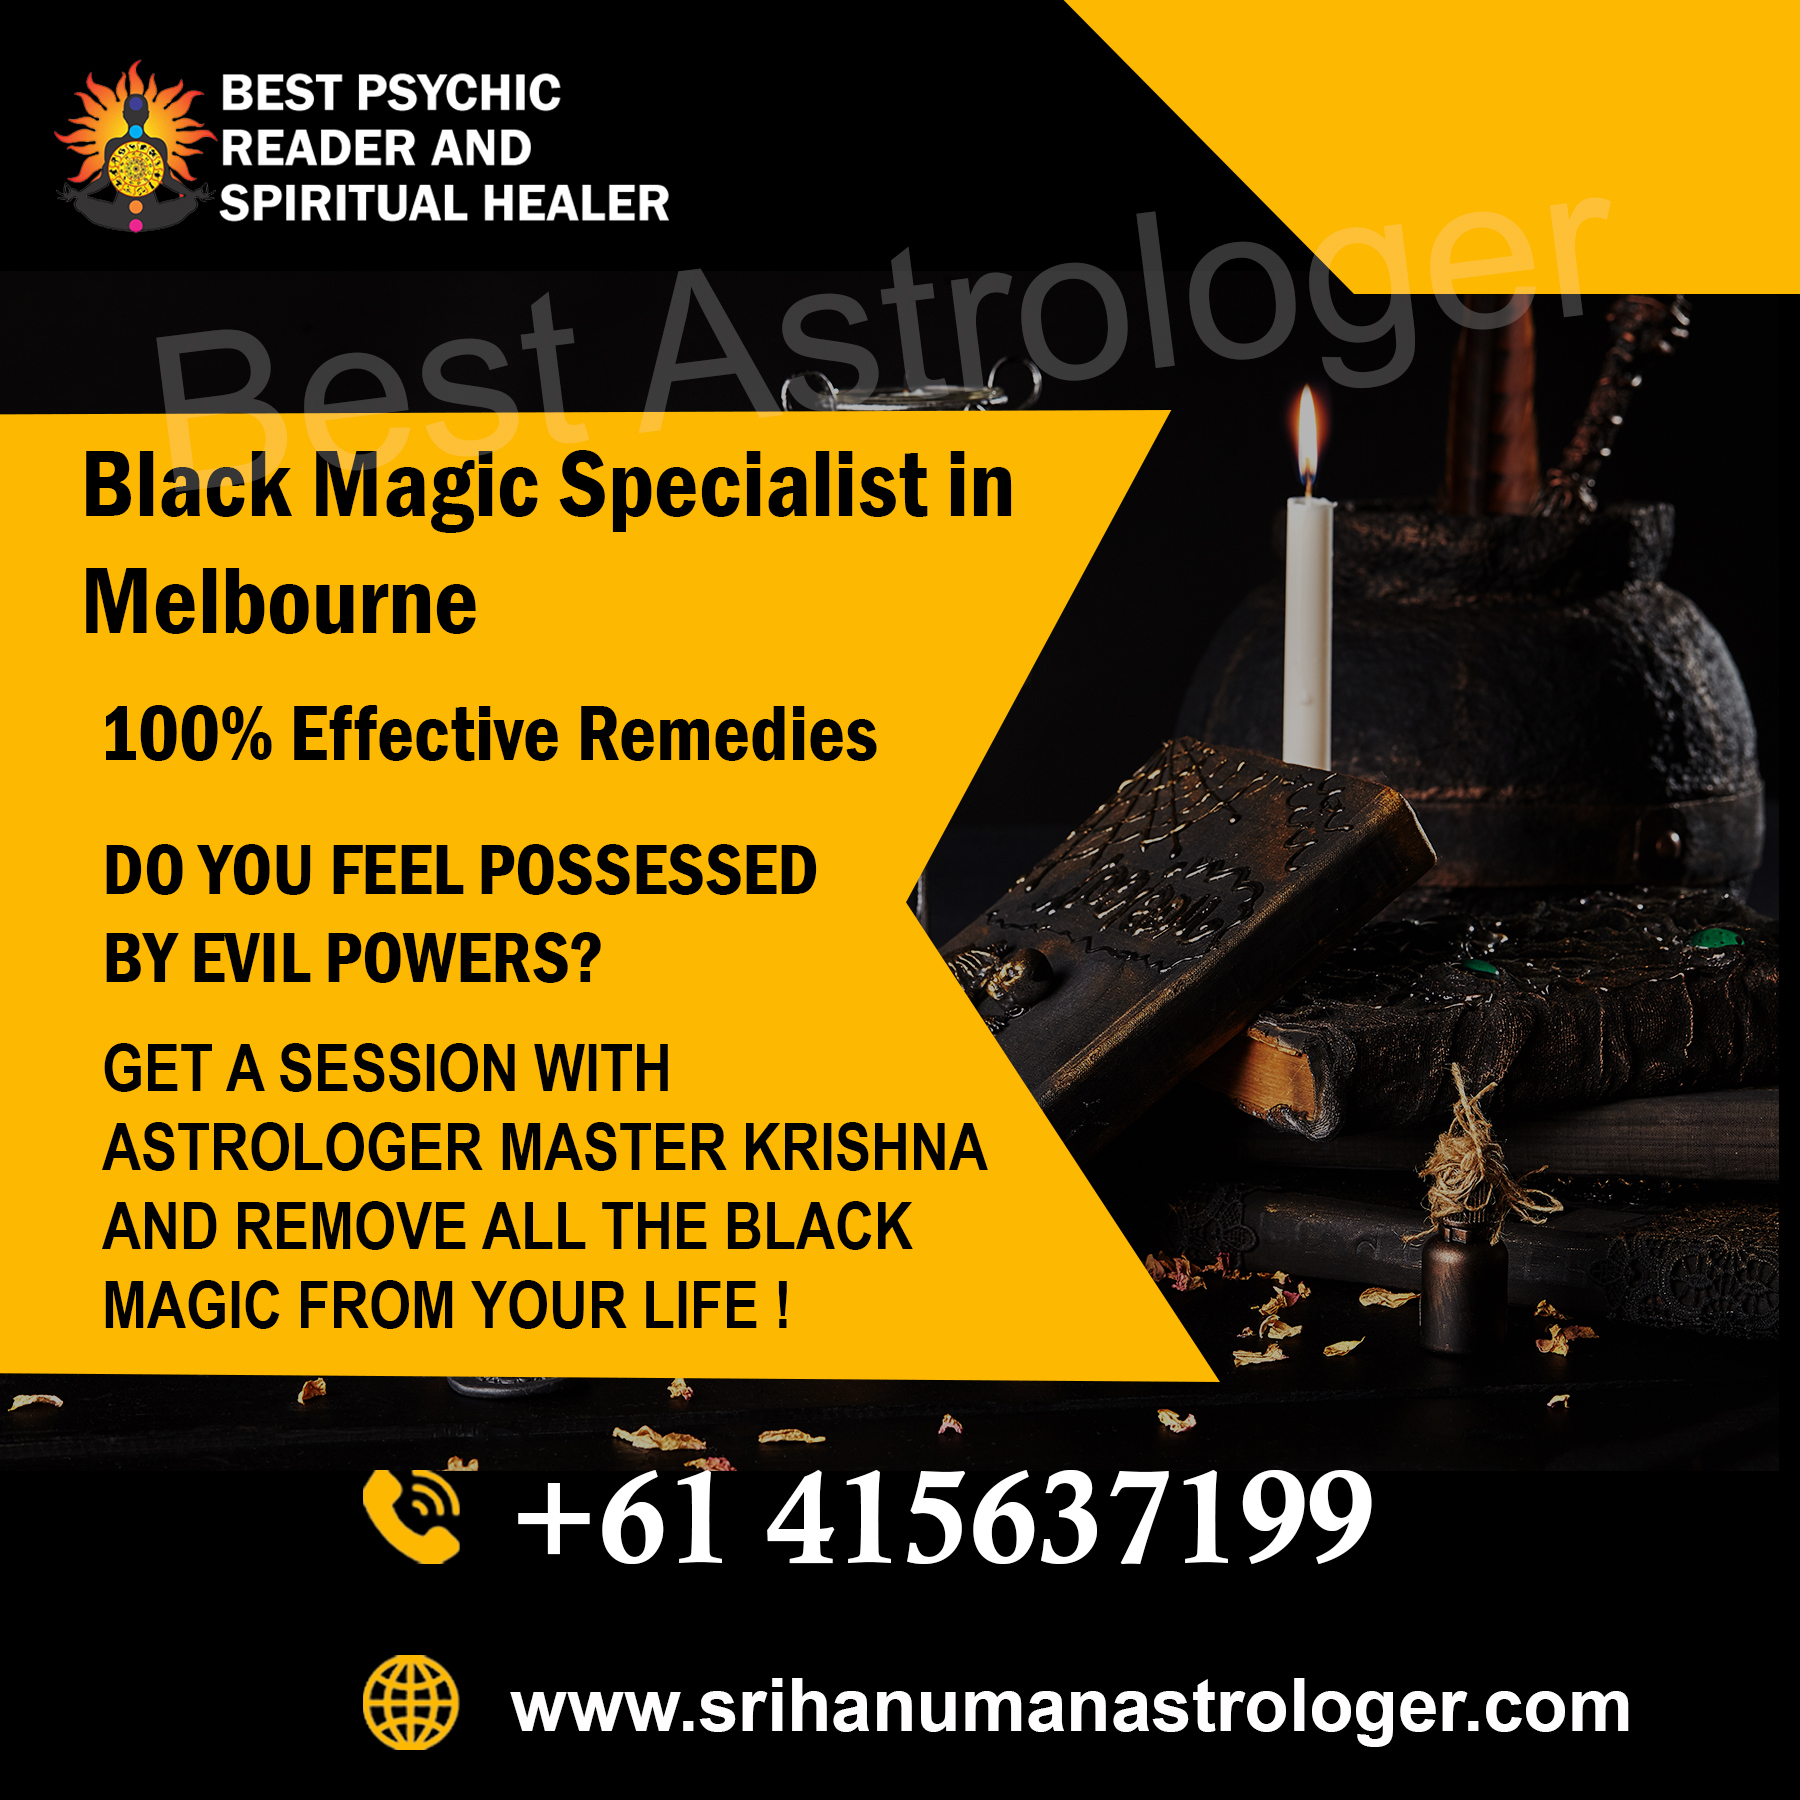 Black Magic Specialist in Melbourne